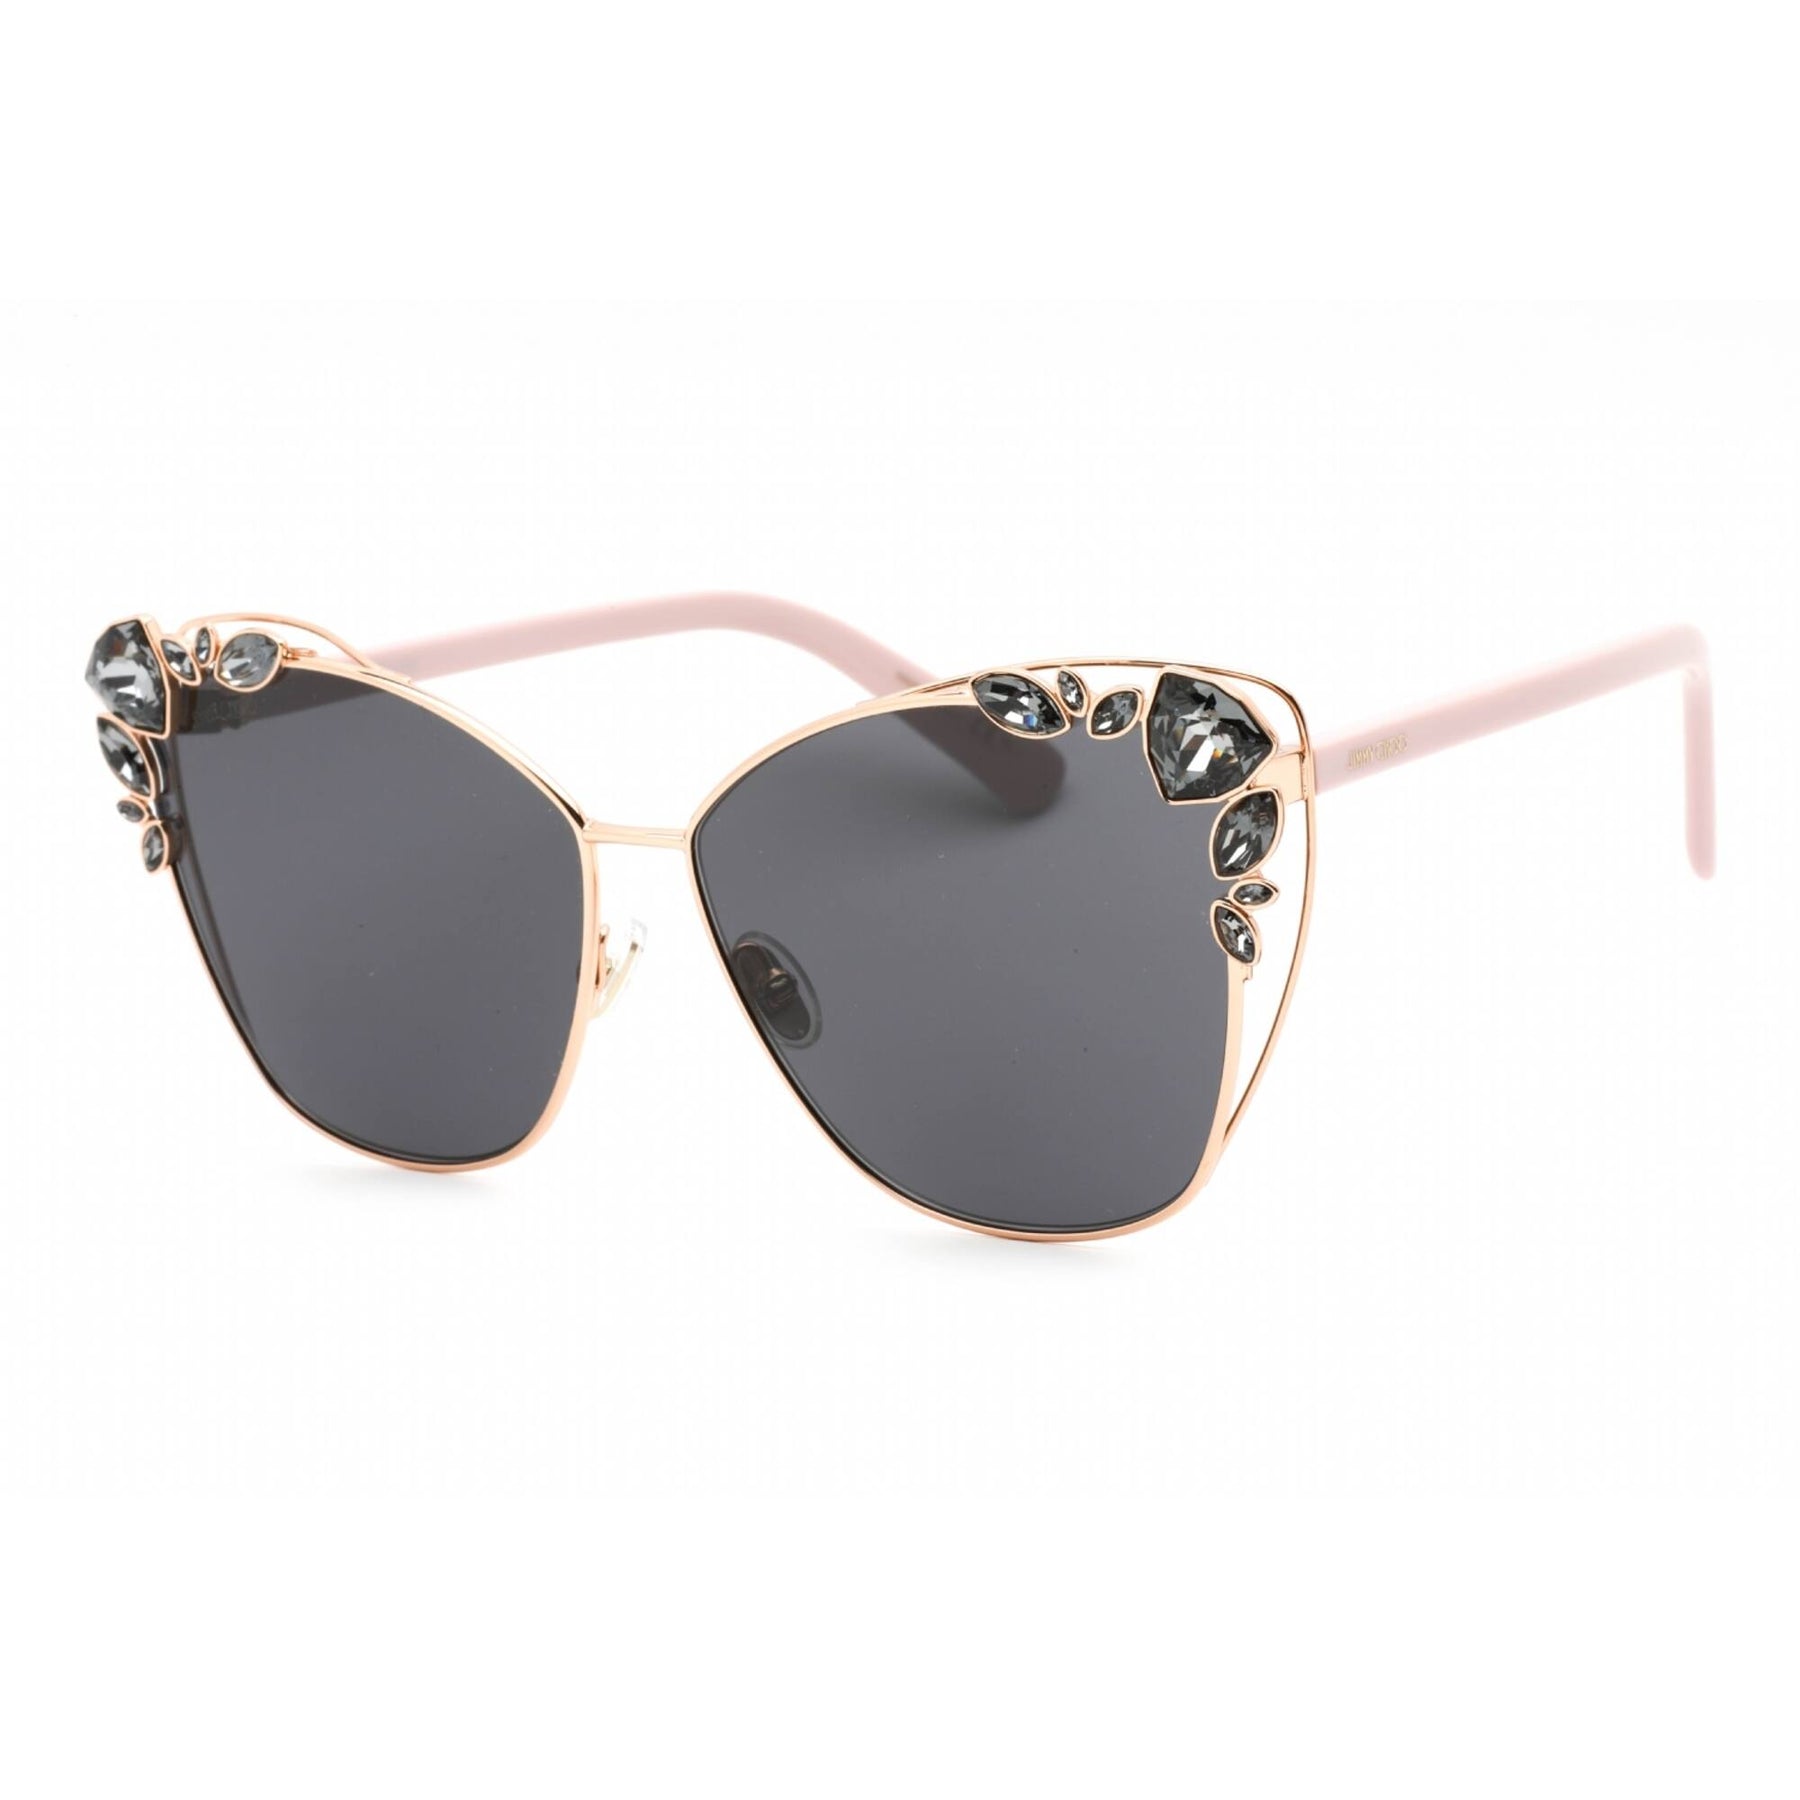 Jimmy Choo Women's Sunglasses - Gold Copper/Pink Cat Eye Frame | KYLA/S 25TH 0DDB IR